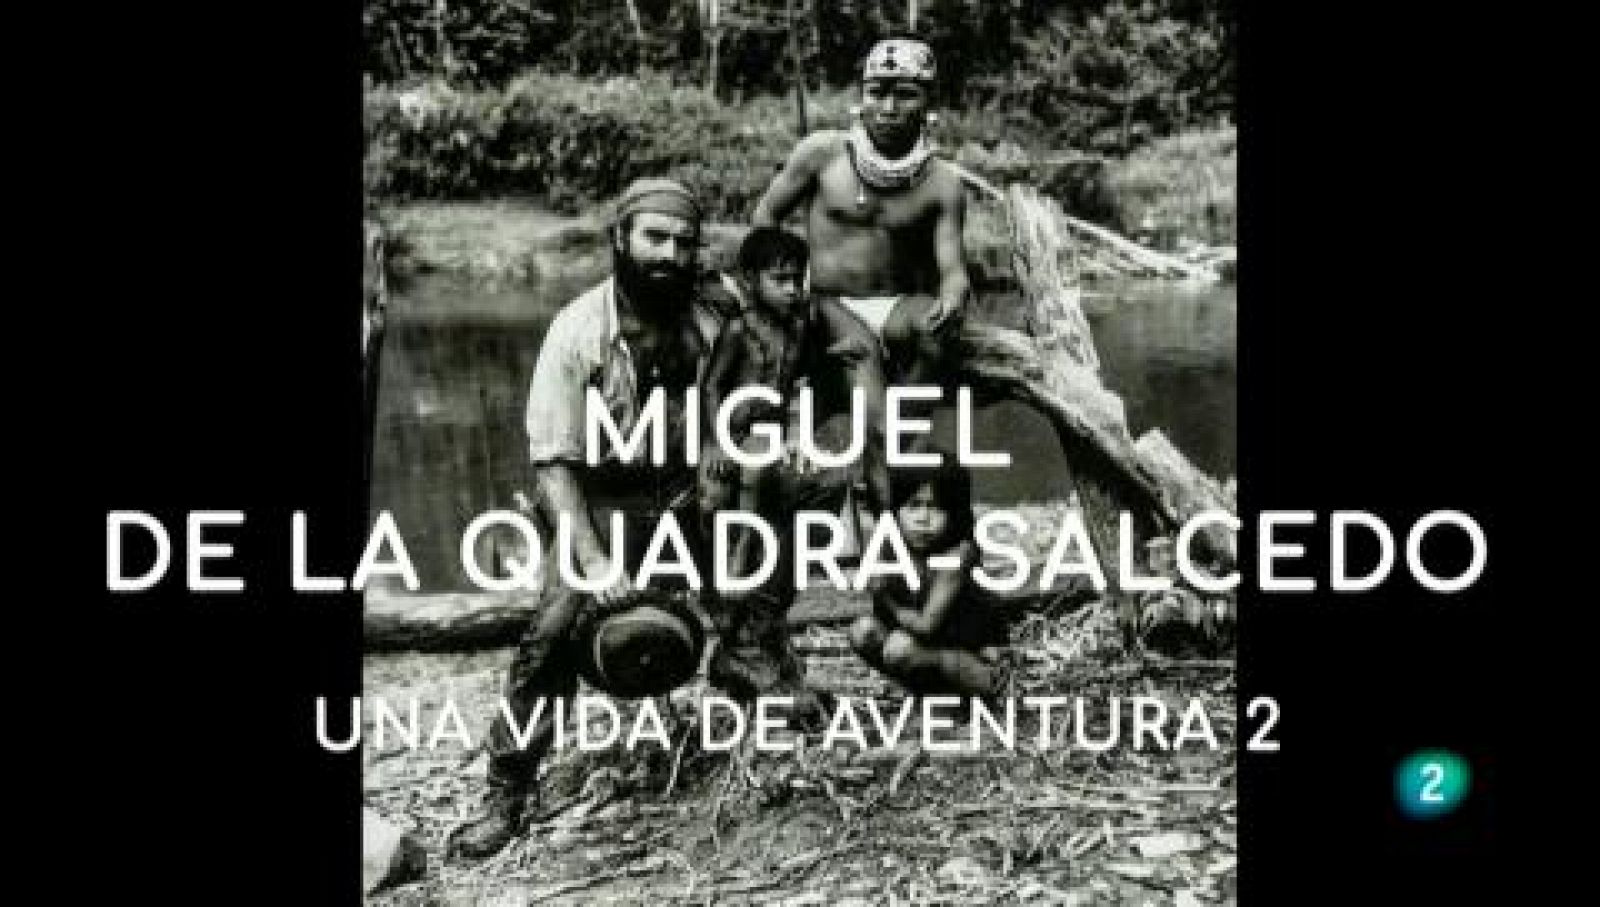 La aventura del saber - Miguel de la Quadra-Salcedo. Una vida de aventura 2